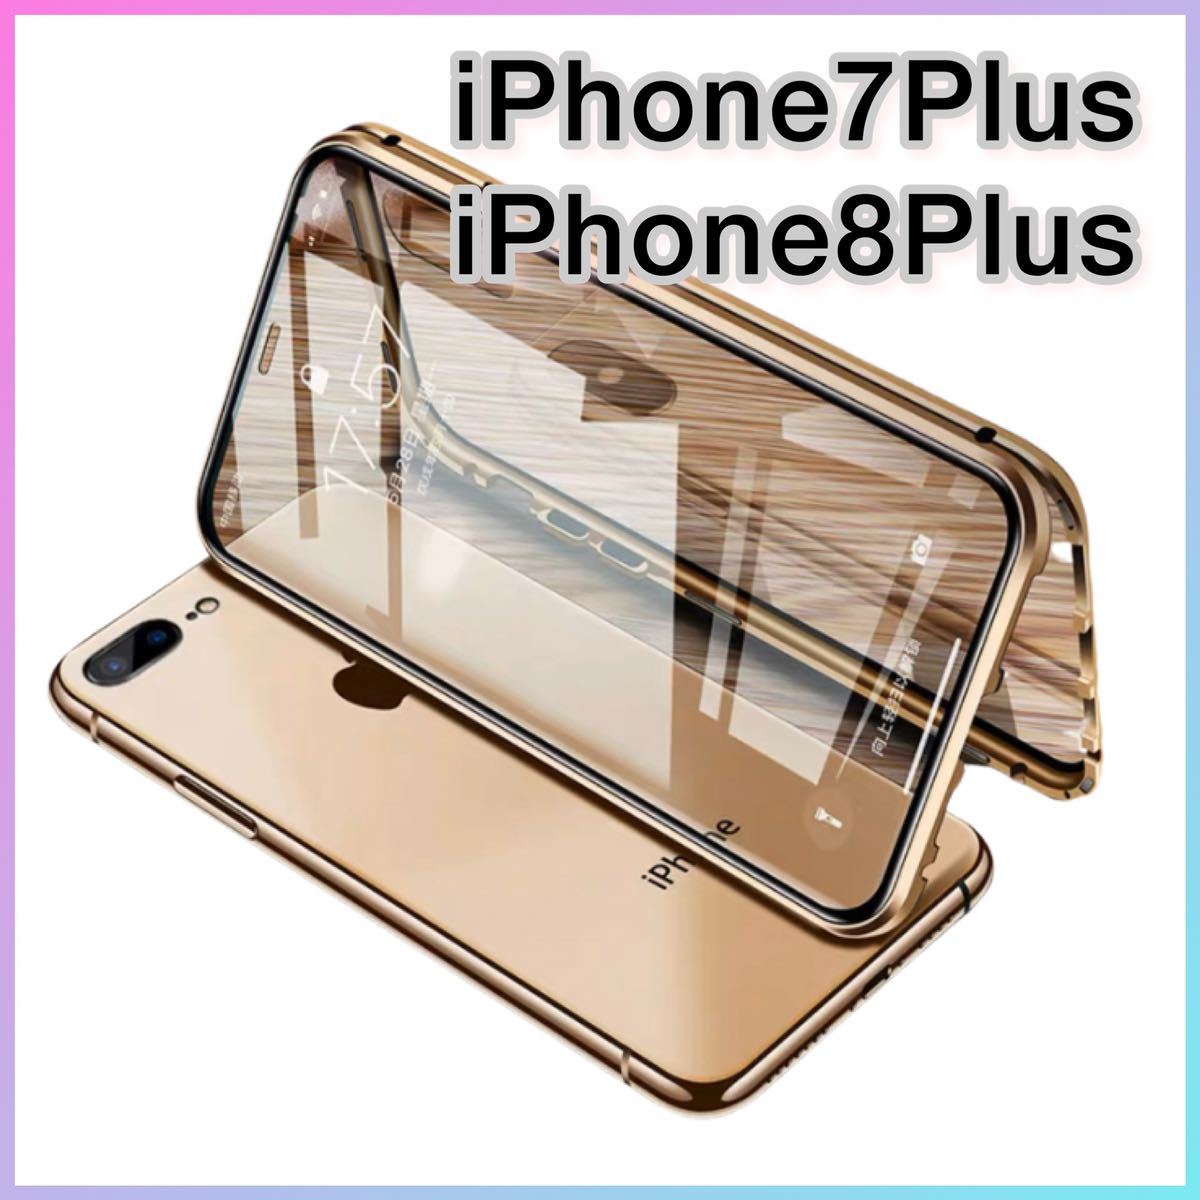 iPhoneケース iPhone8 Plus iPhone7 Plus ガラスケース 両面保護カバー クリアガラス 透明ケース クリアケース ワイヤレス充電_画像1